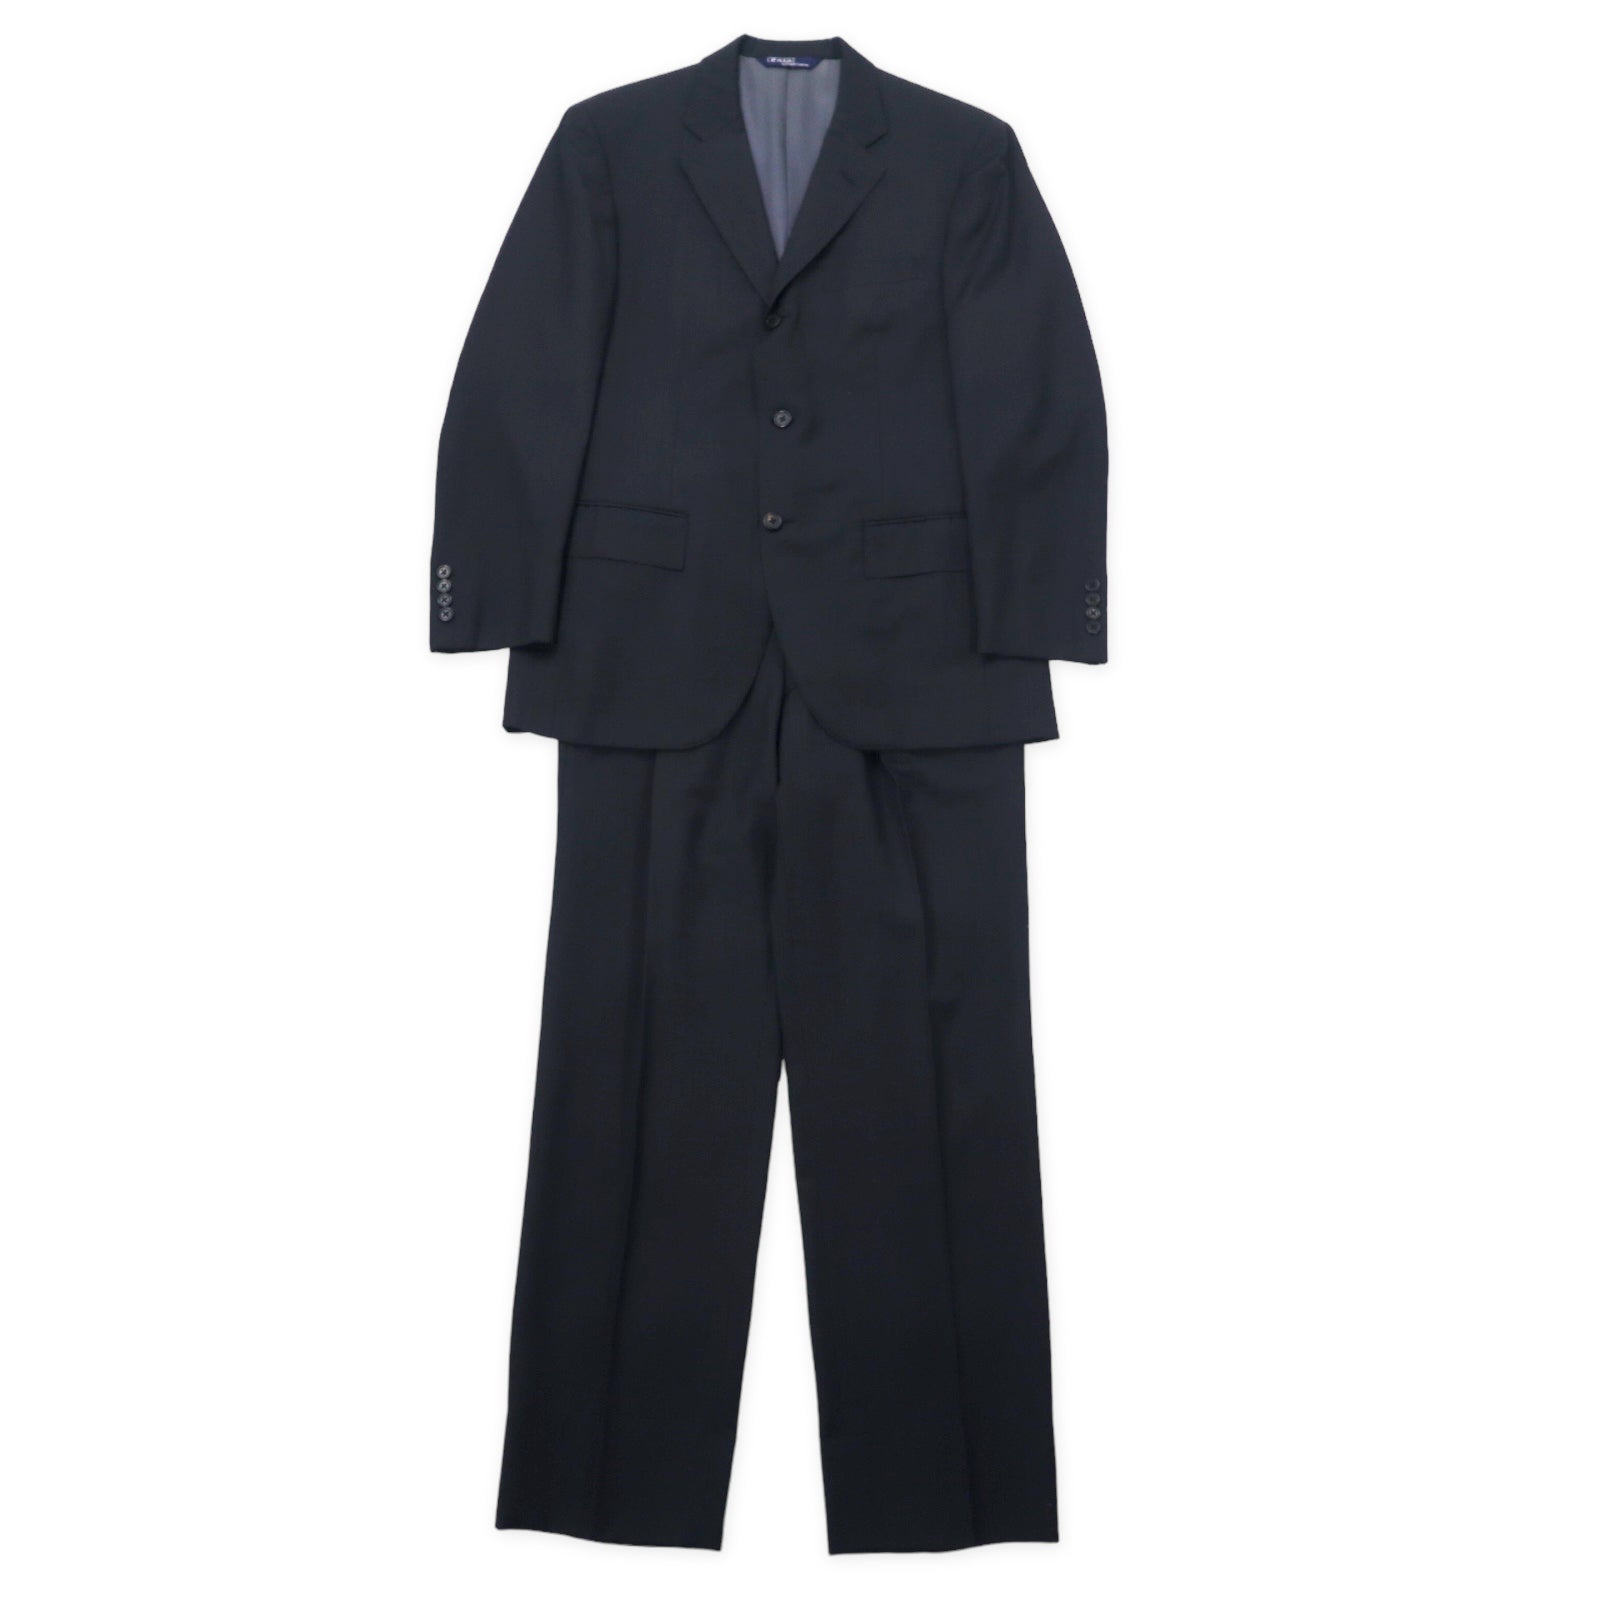 POLO BY RALPH LAUREN 3B Suit Setup C96-W86-T175 AB6 Black Wool 